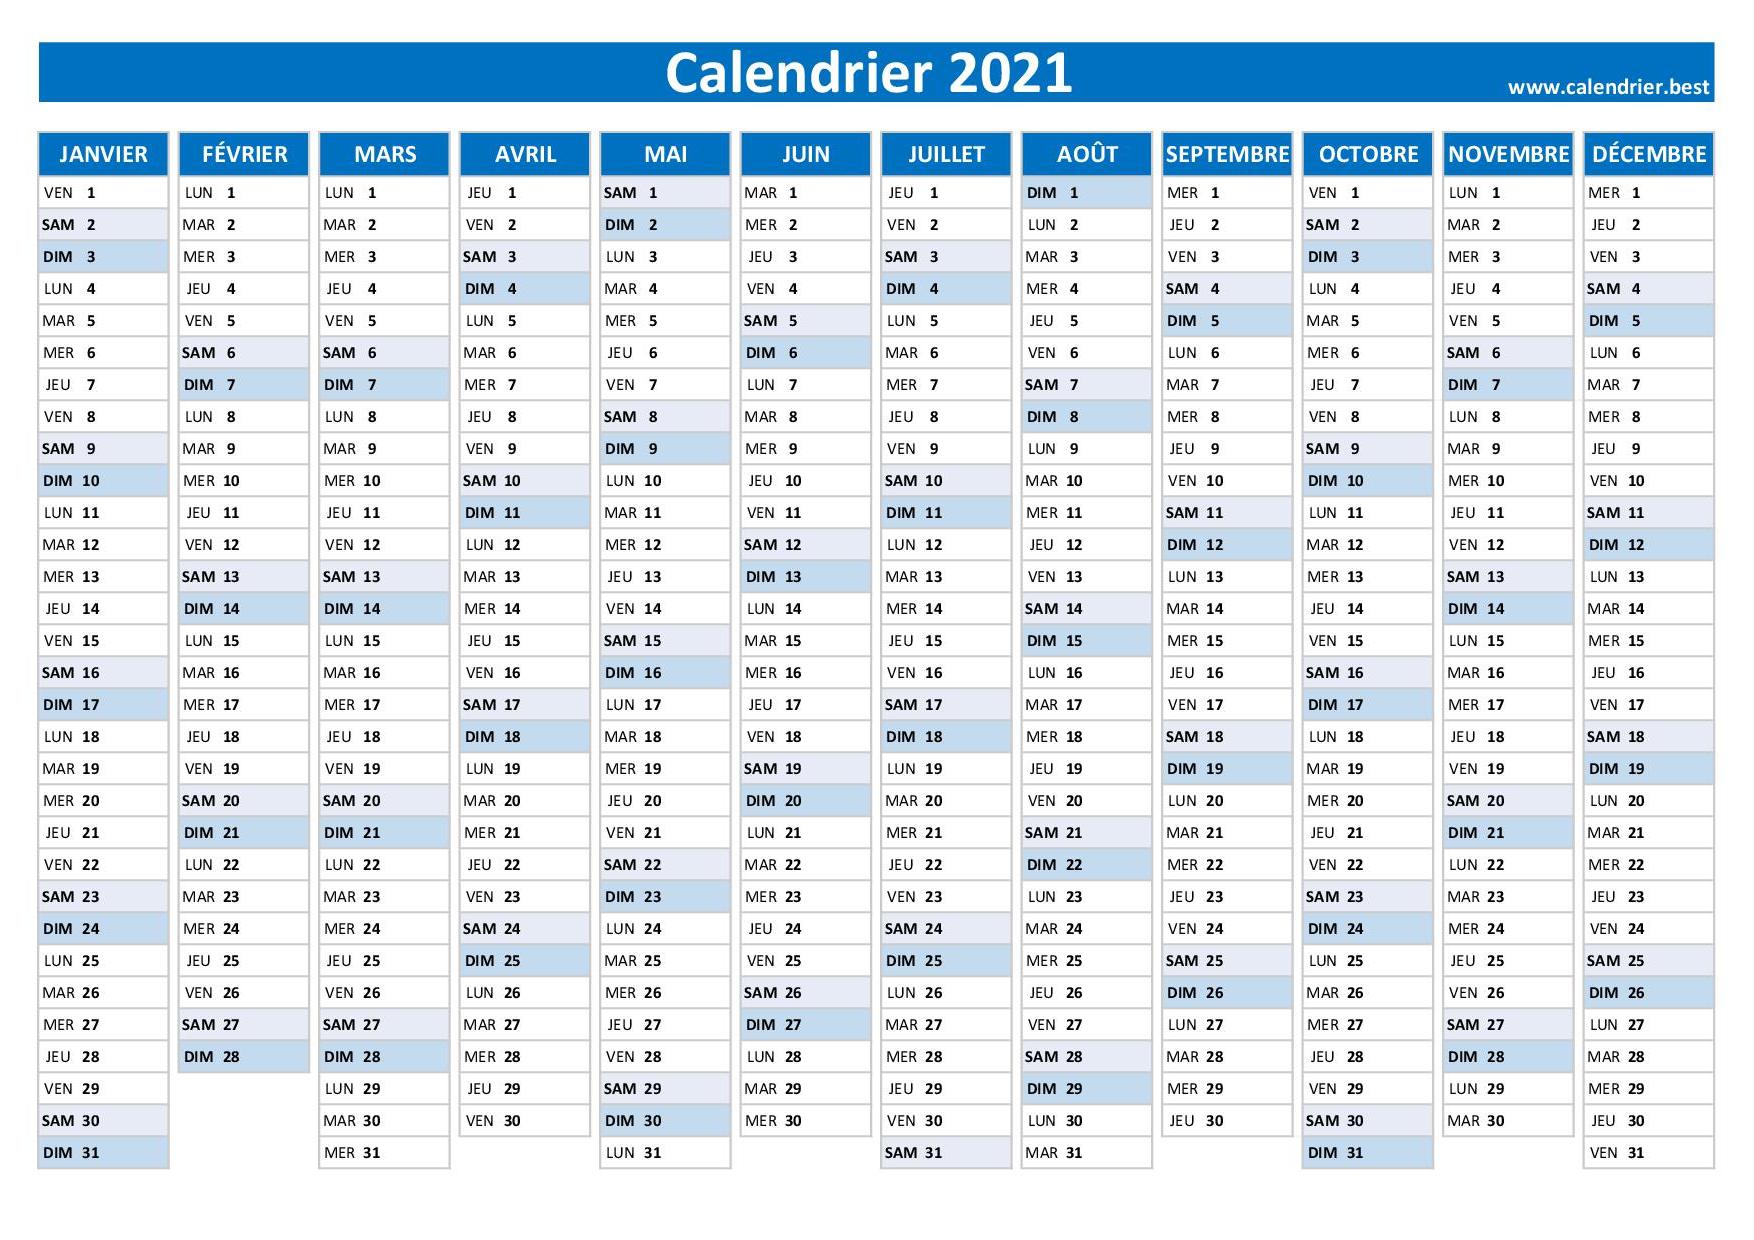 Calendrier annuel 2021 à imprimer